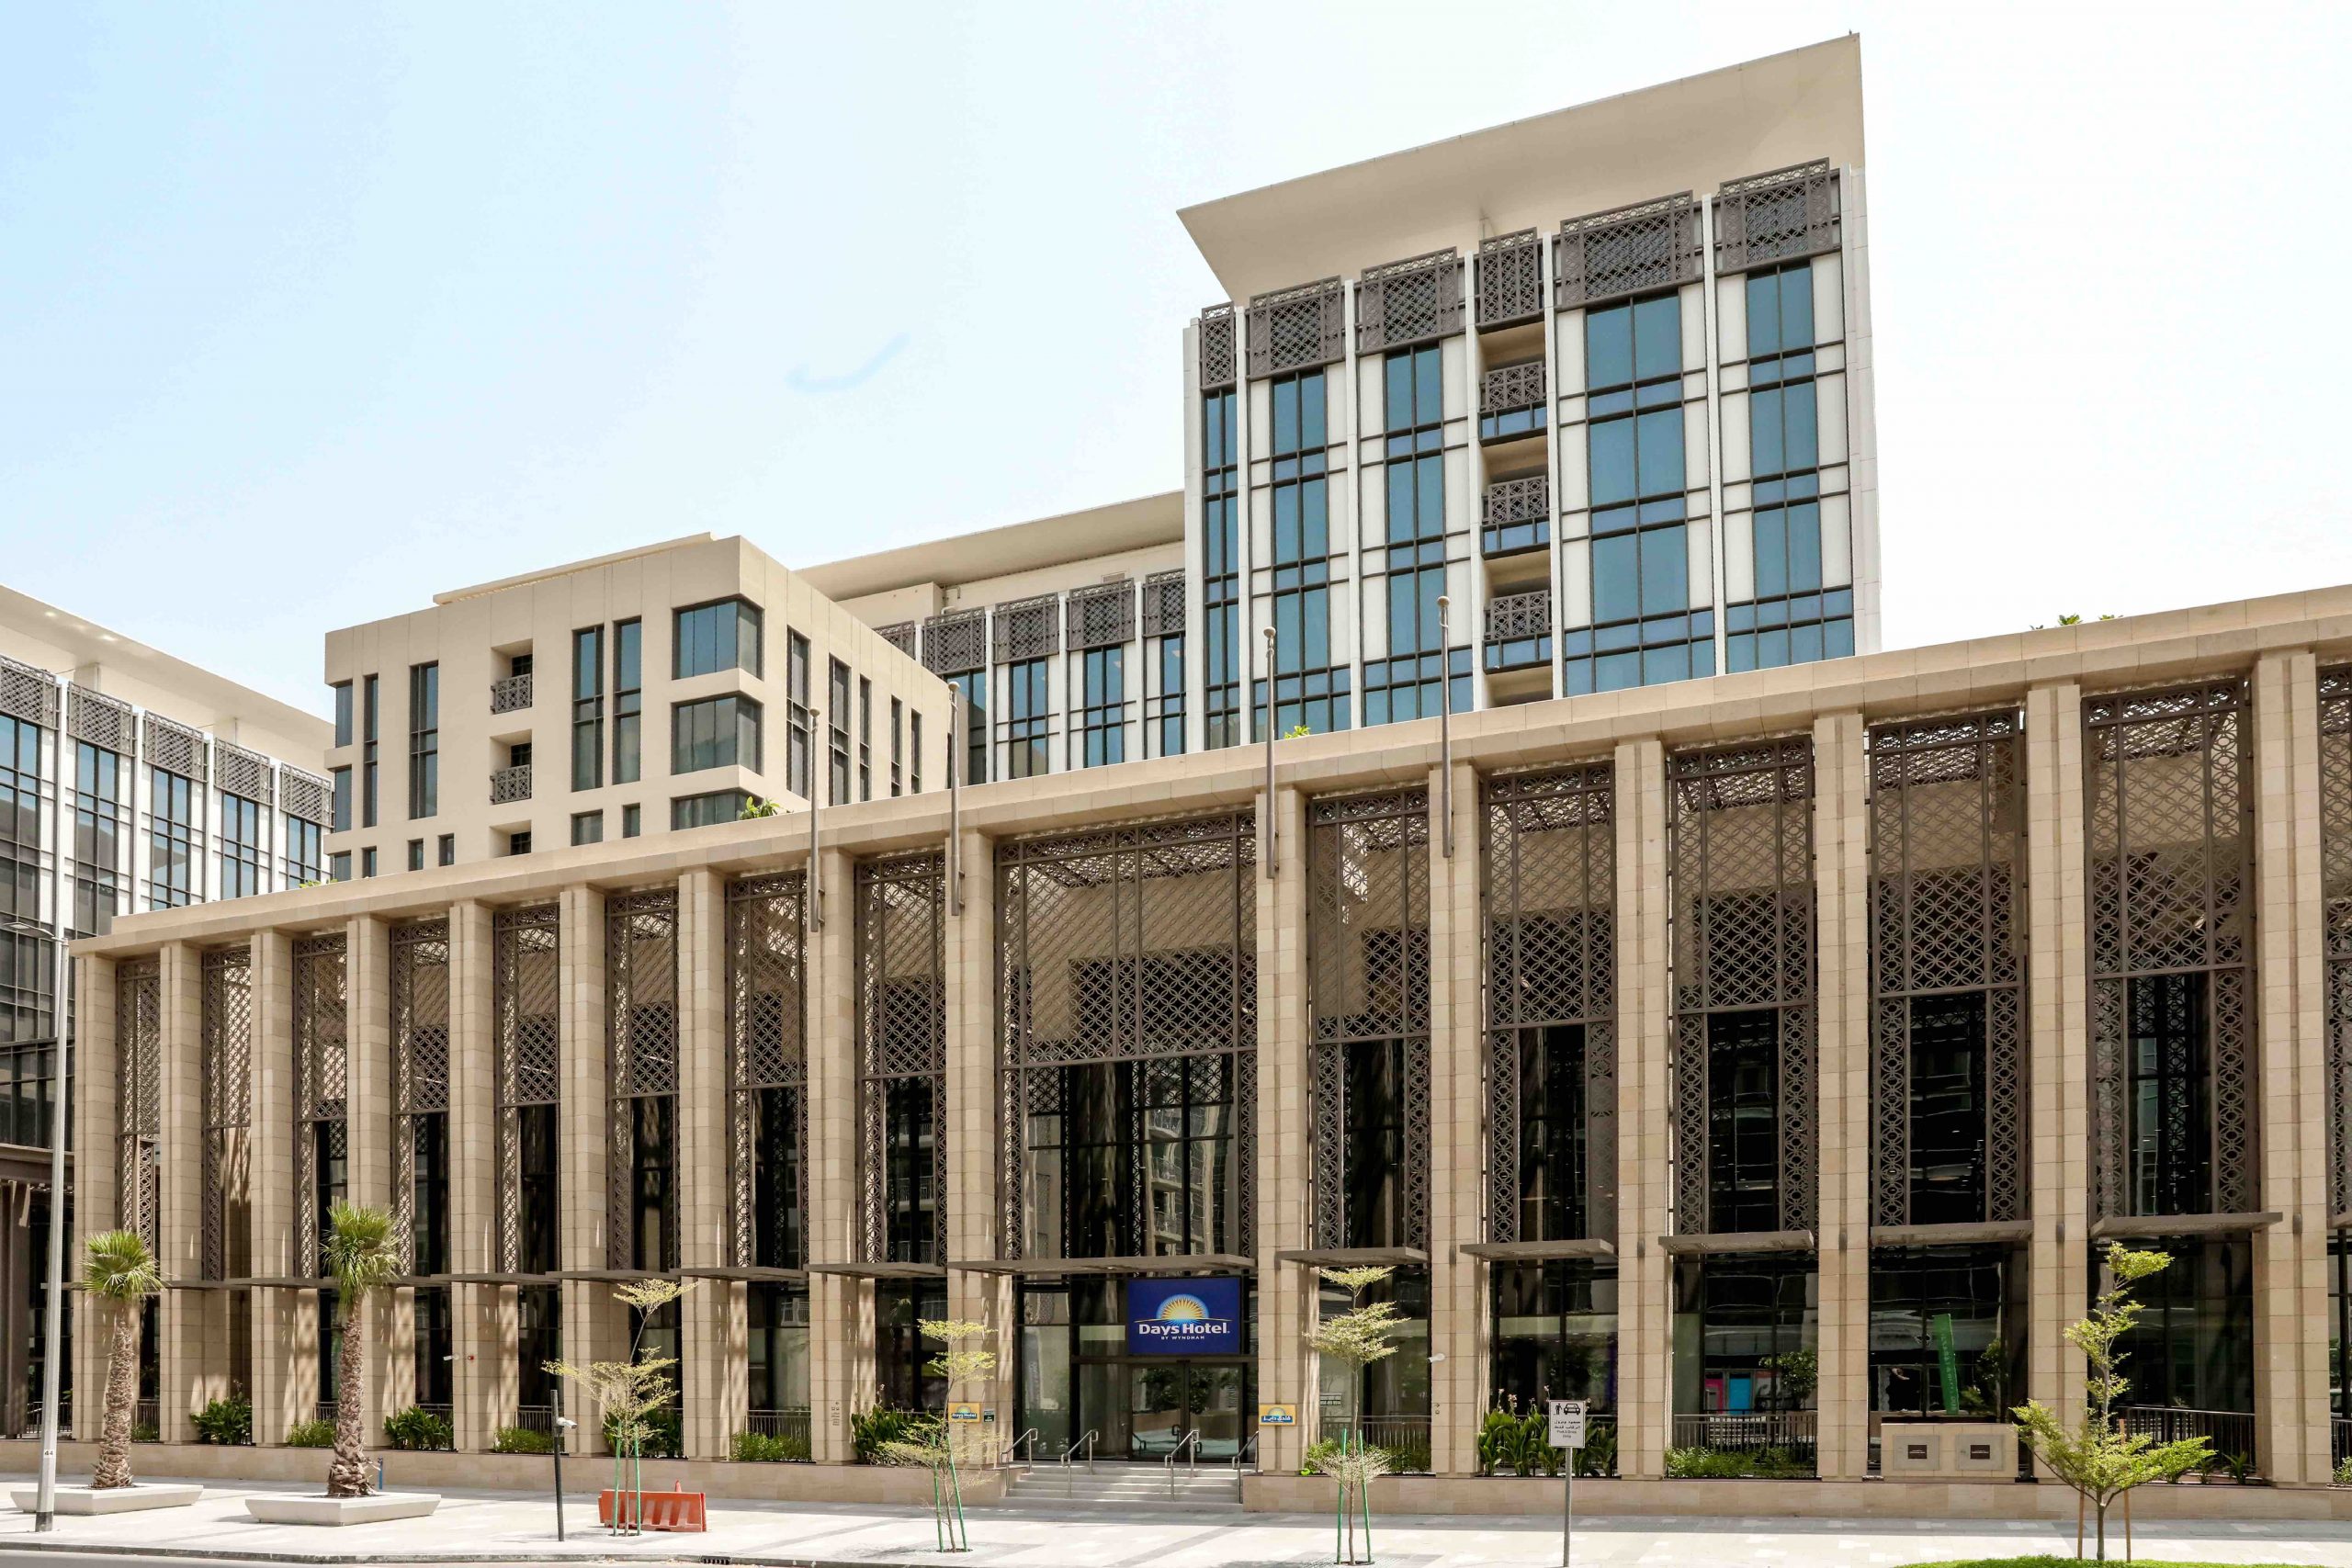 فنادق ومنتجعات ويندام تفتتح فندق دايز هوتيل في دبي